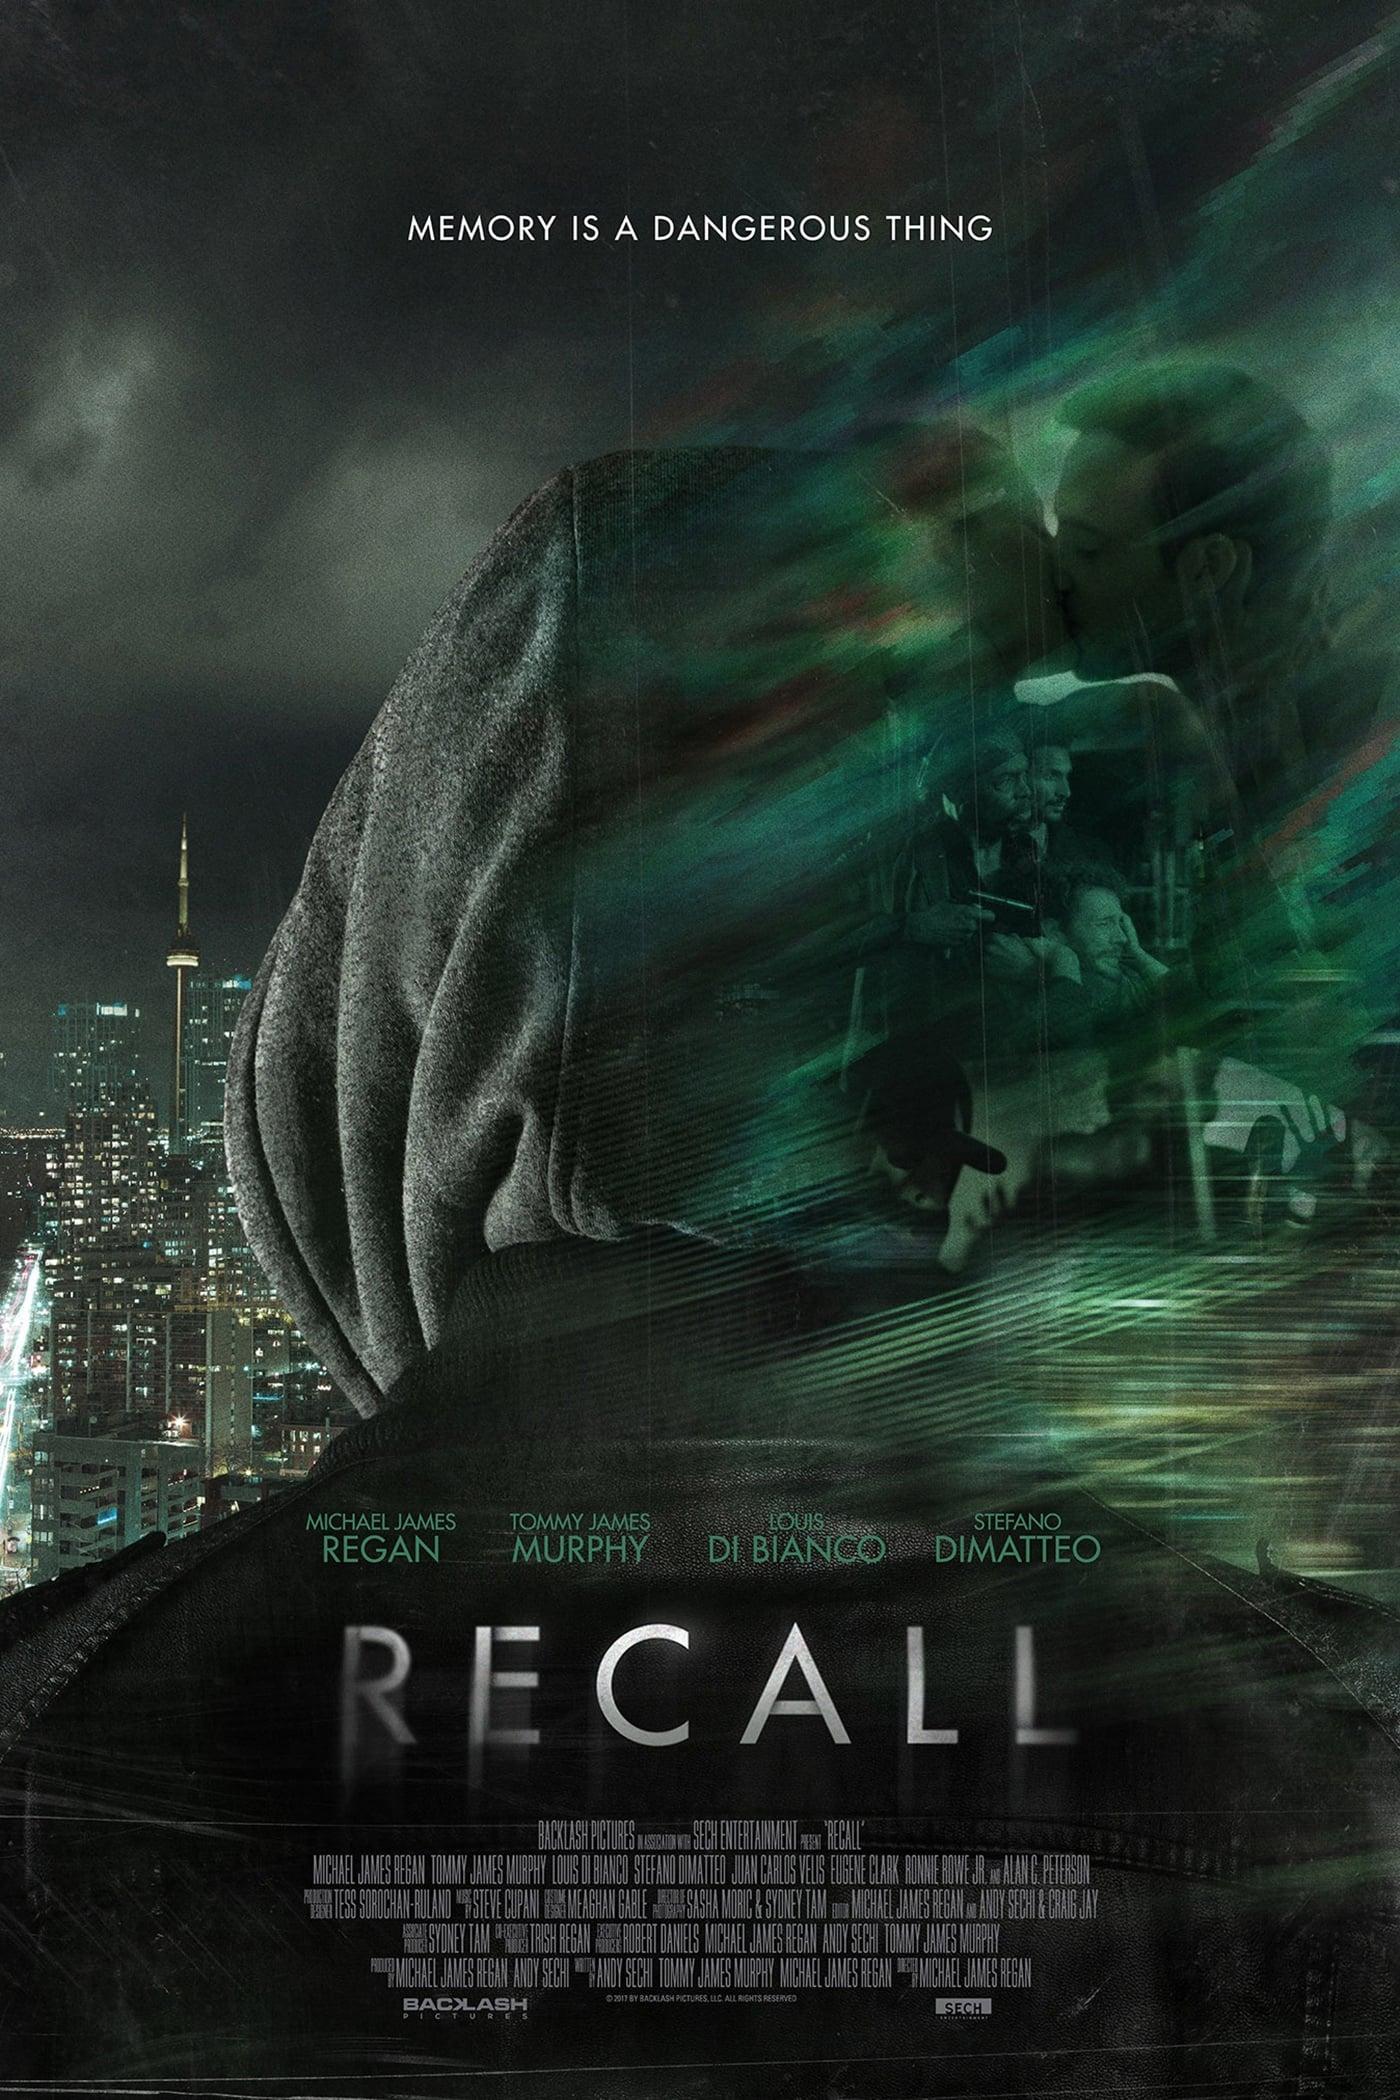 Recall poster